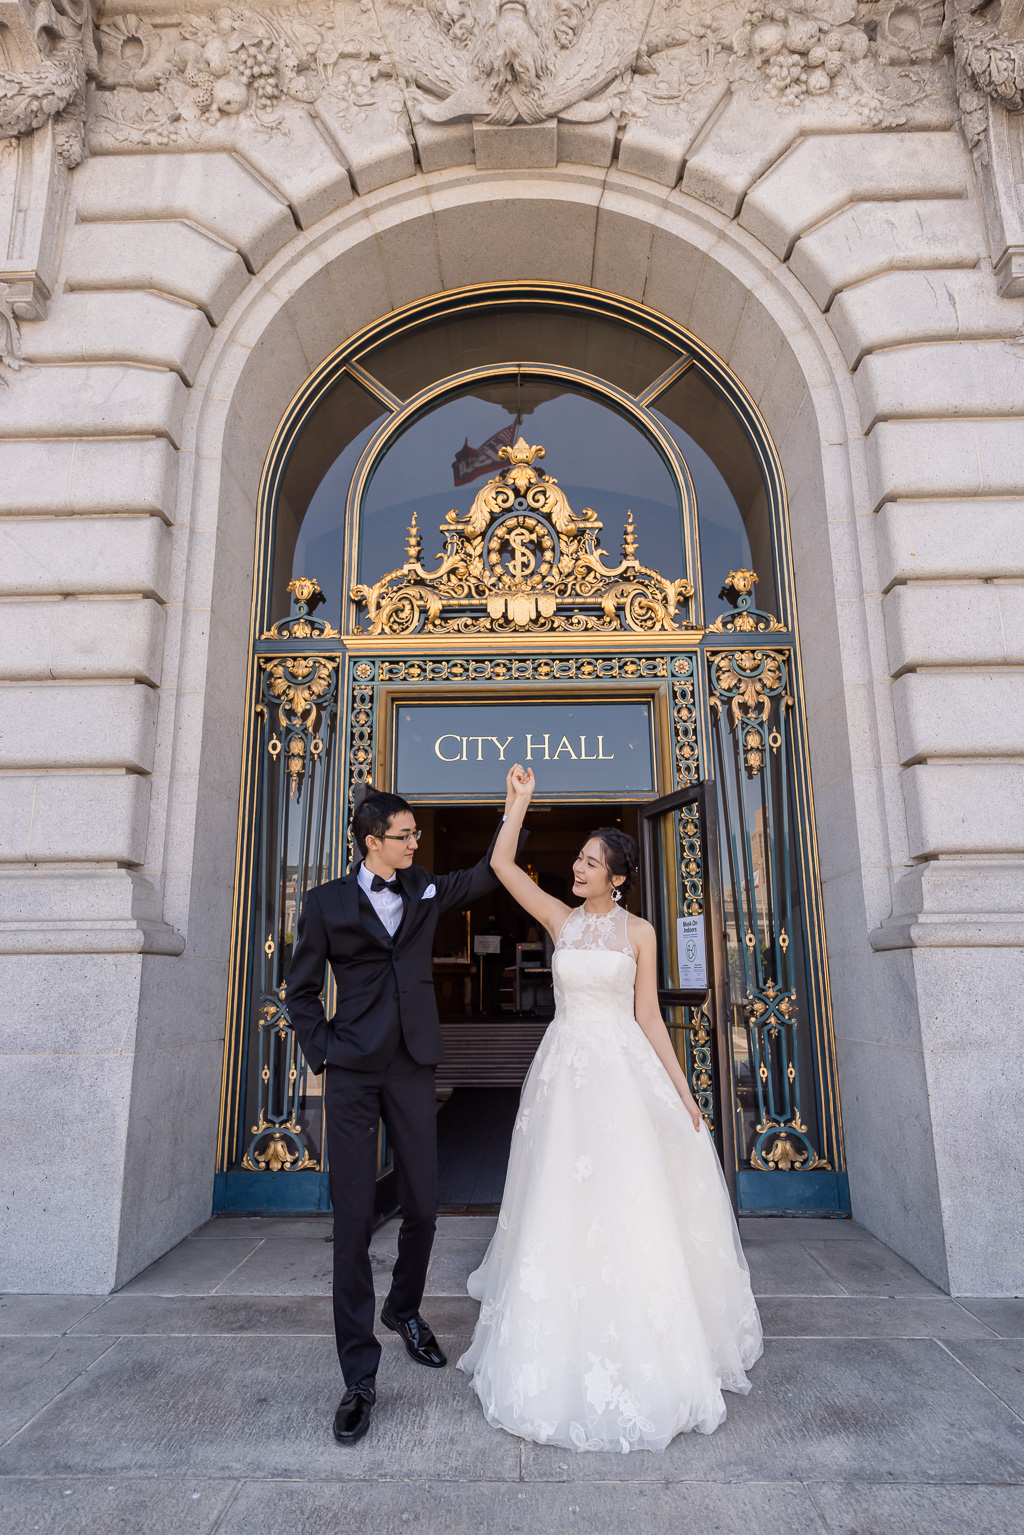 SF City Hall main entrance wedding photos